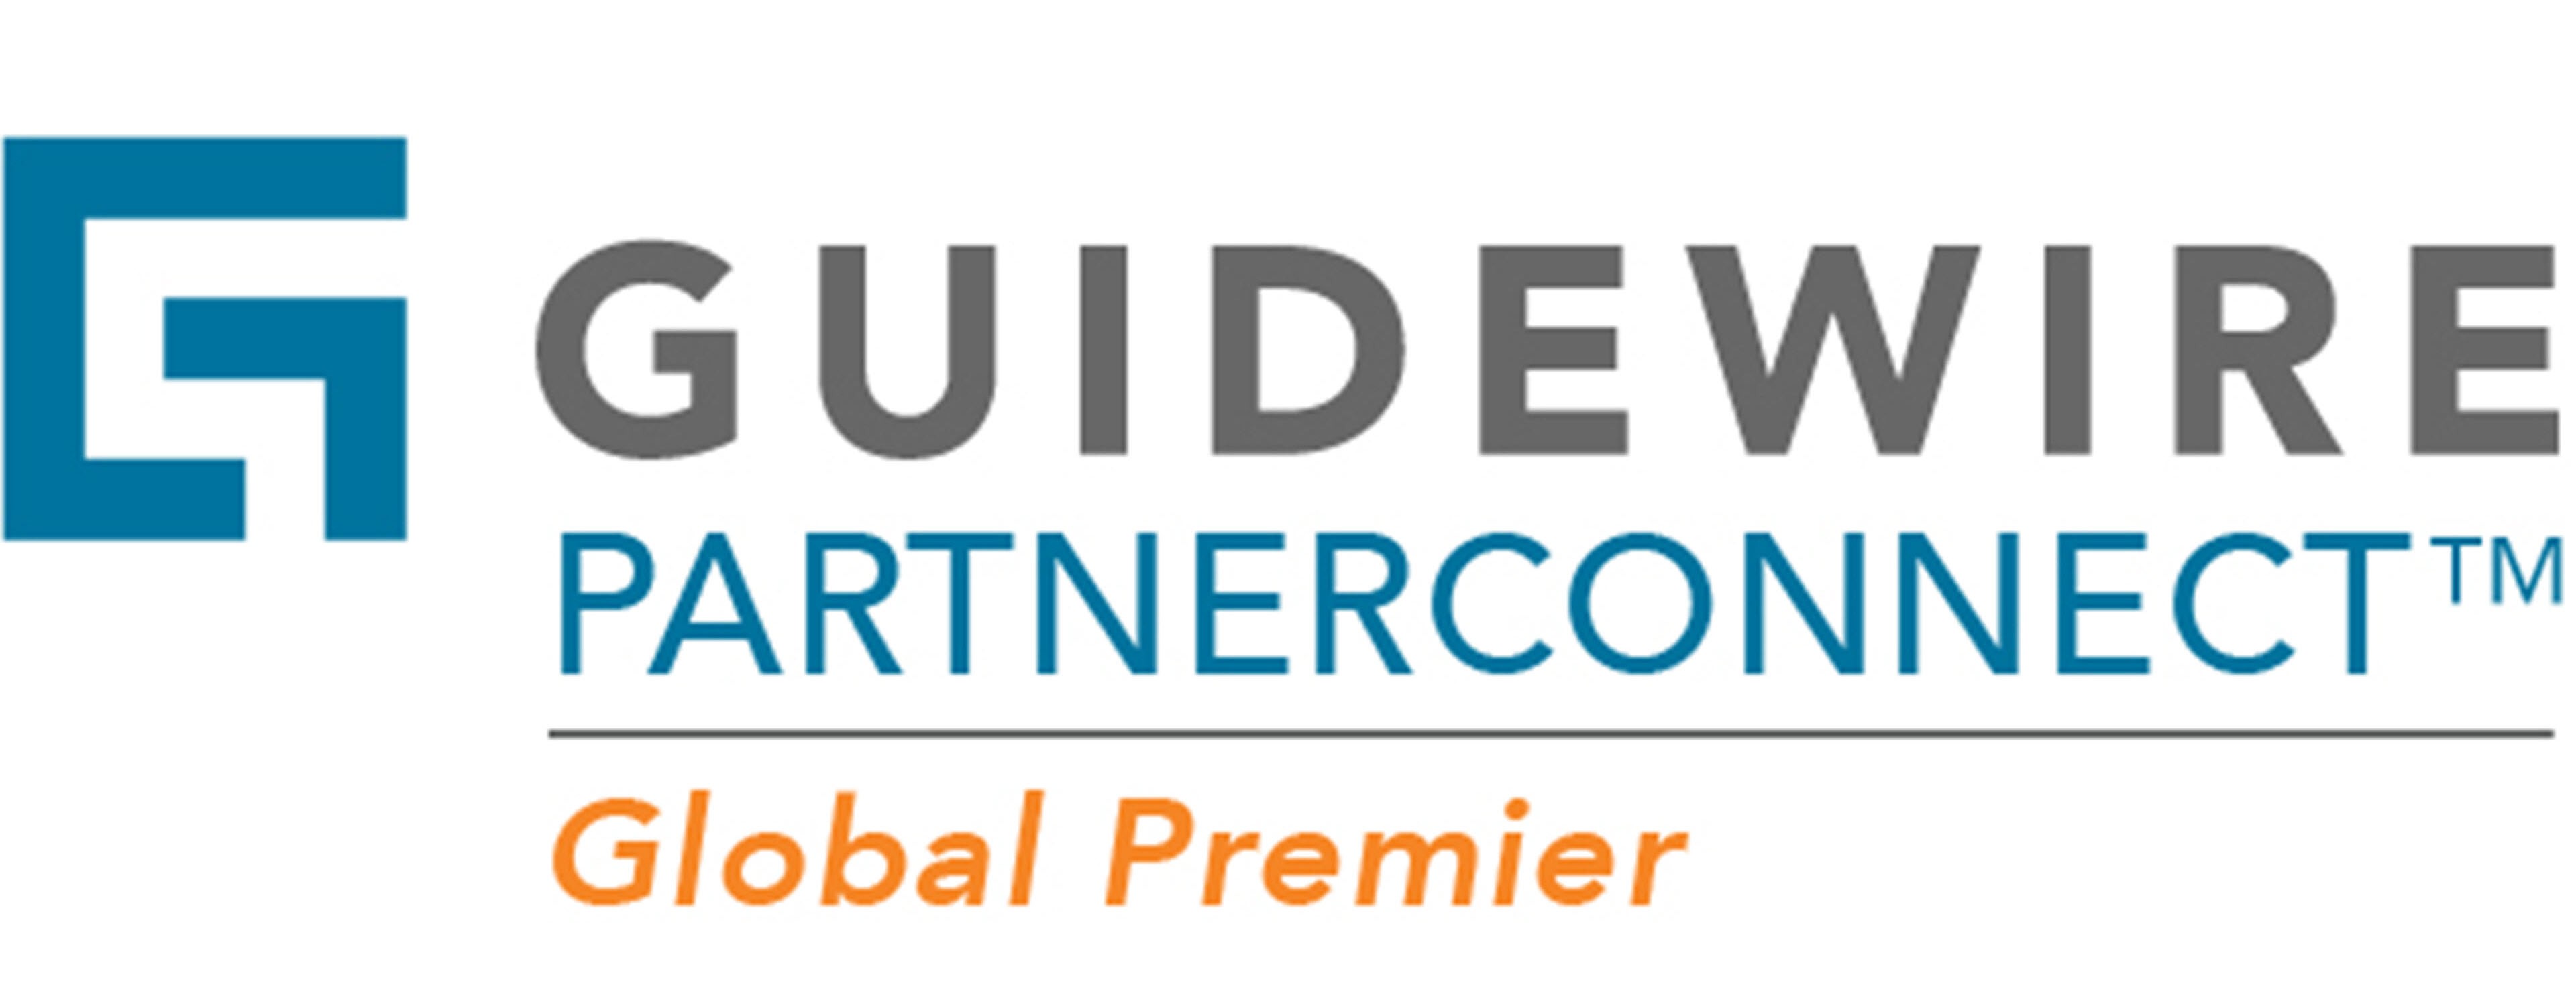 Logotipo de Guidewire